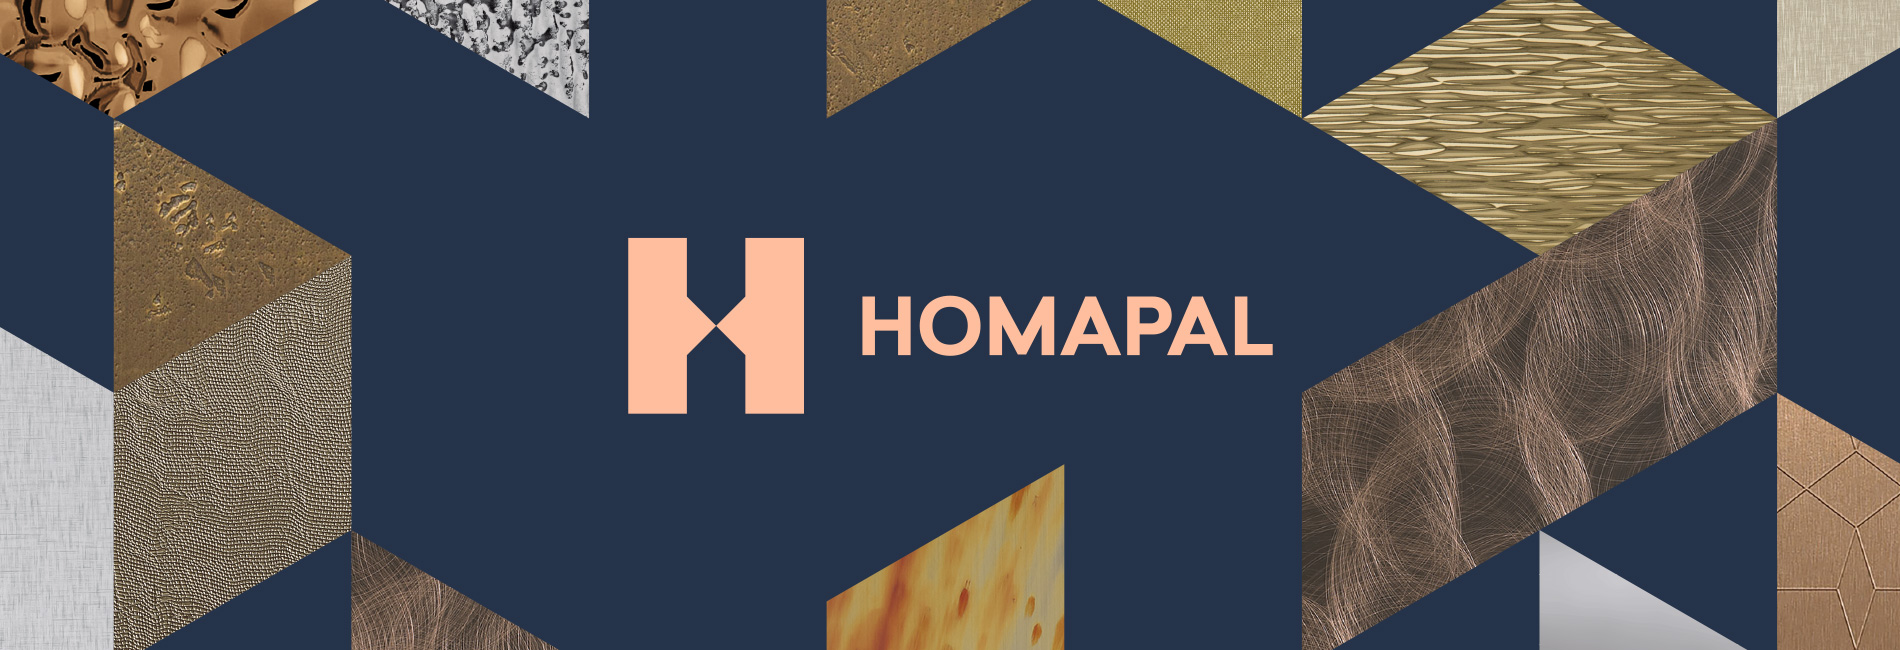 Catalogo Homapal Formica